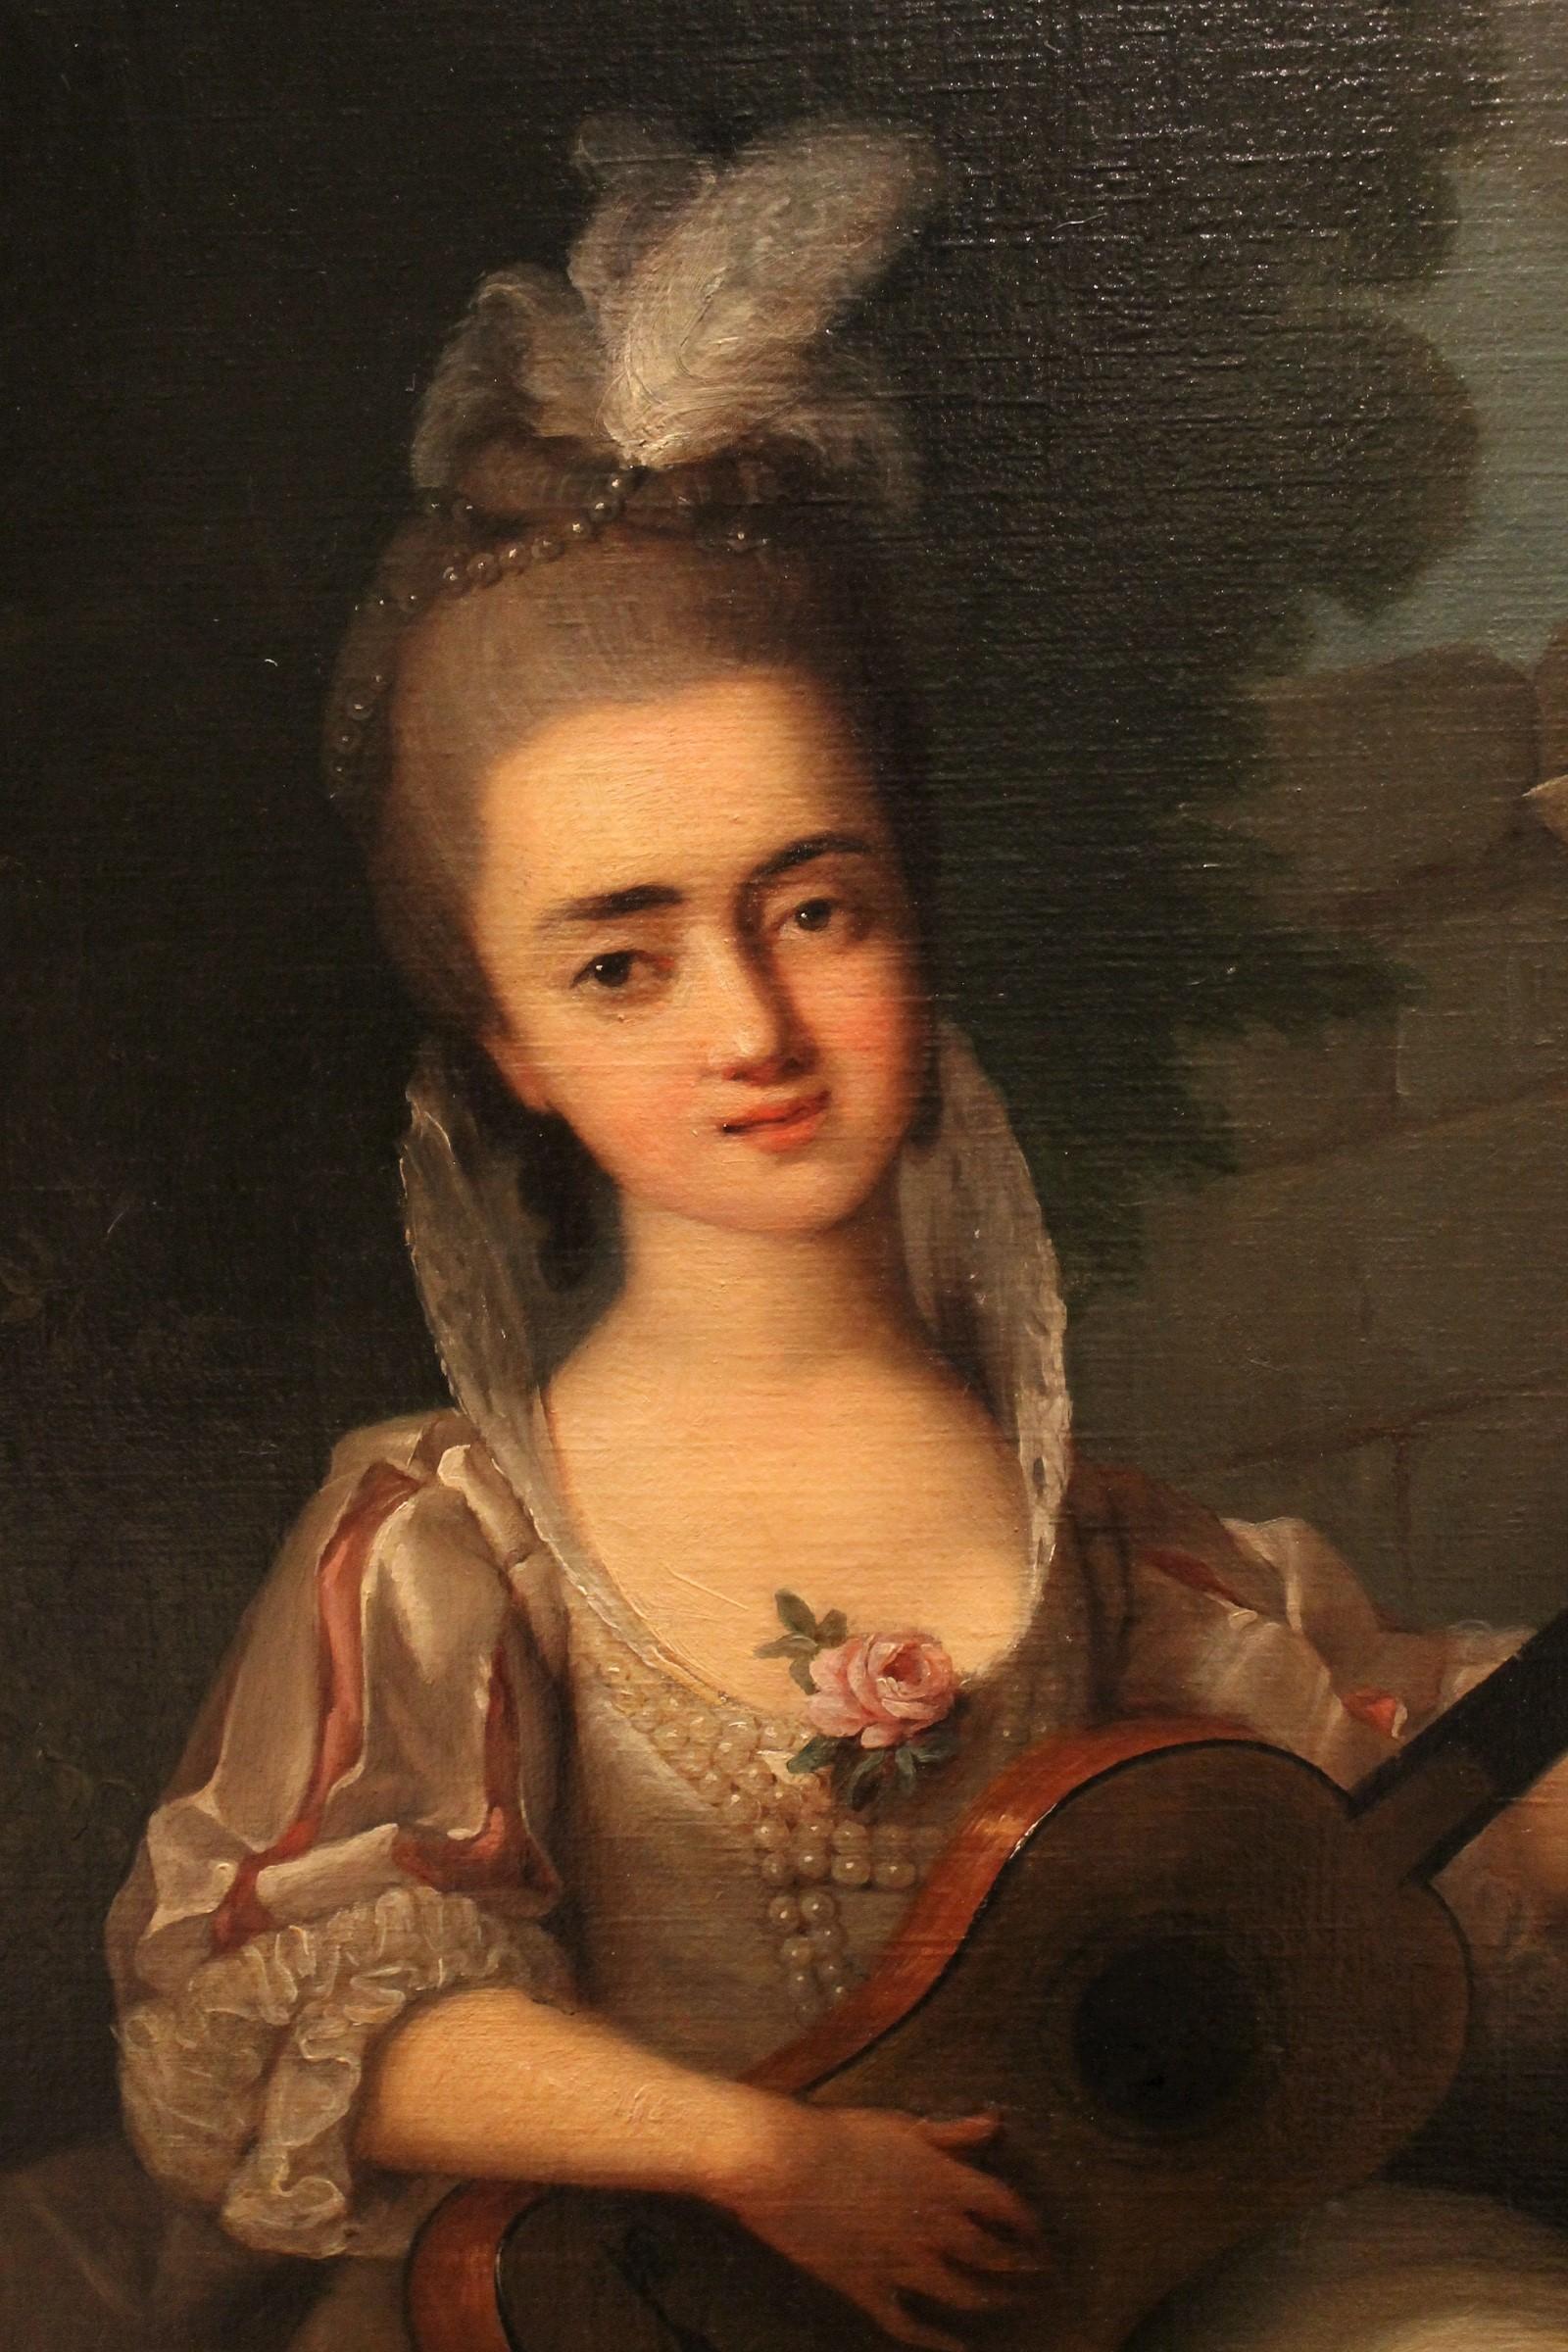 18th century painting woman